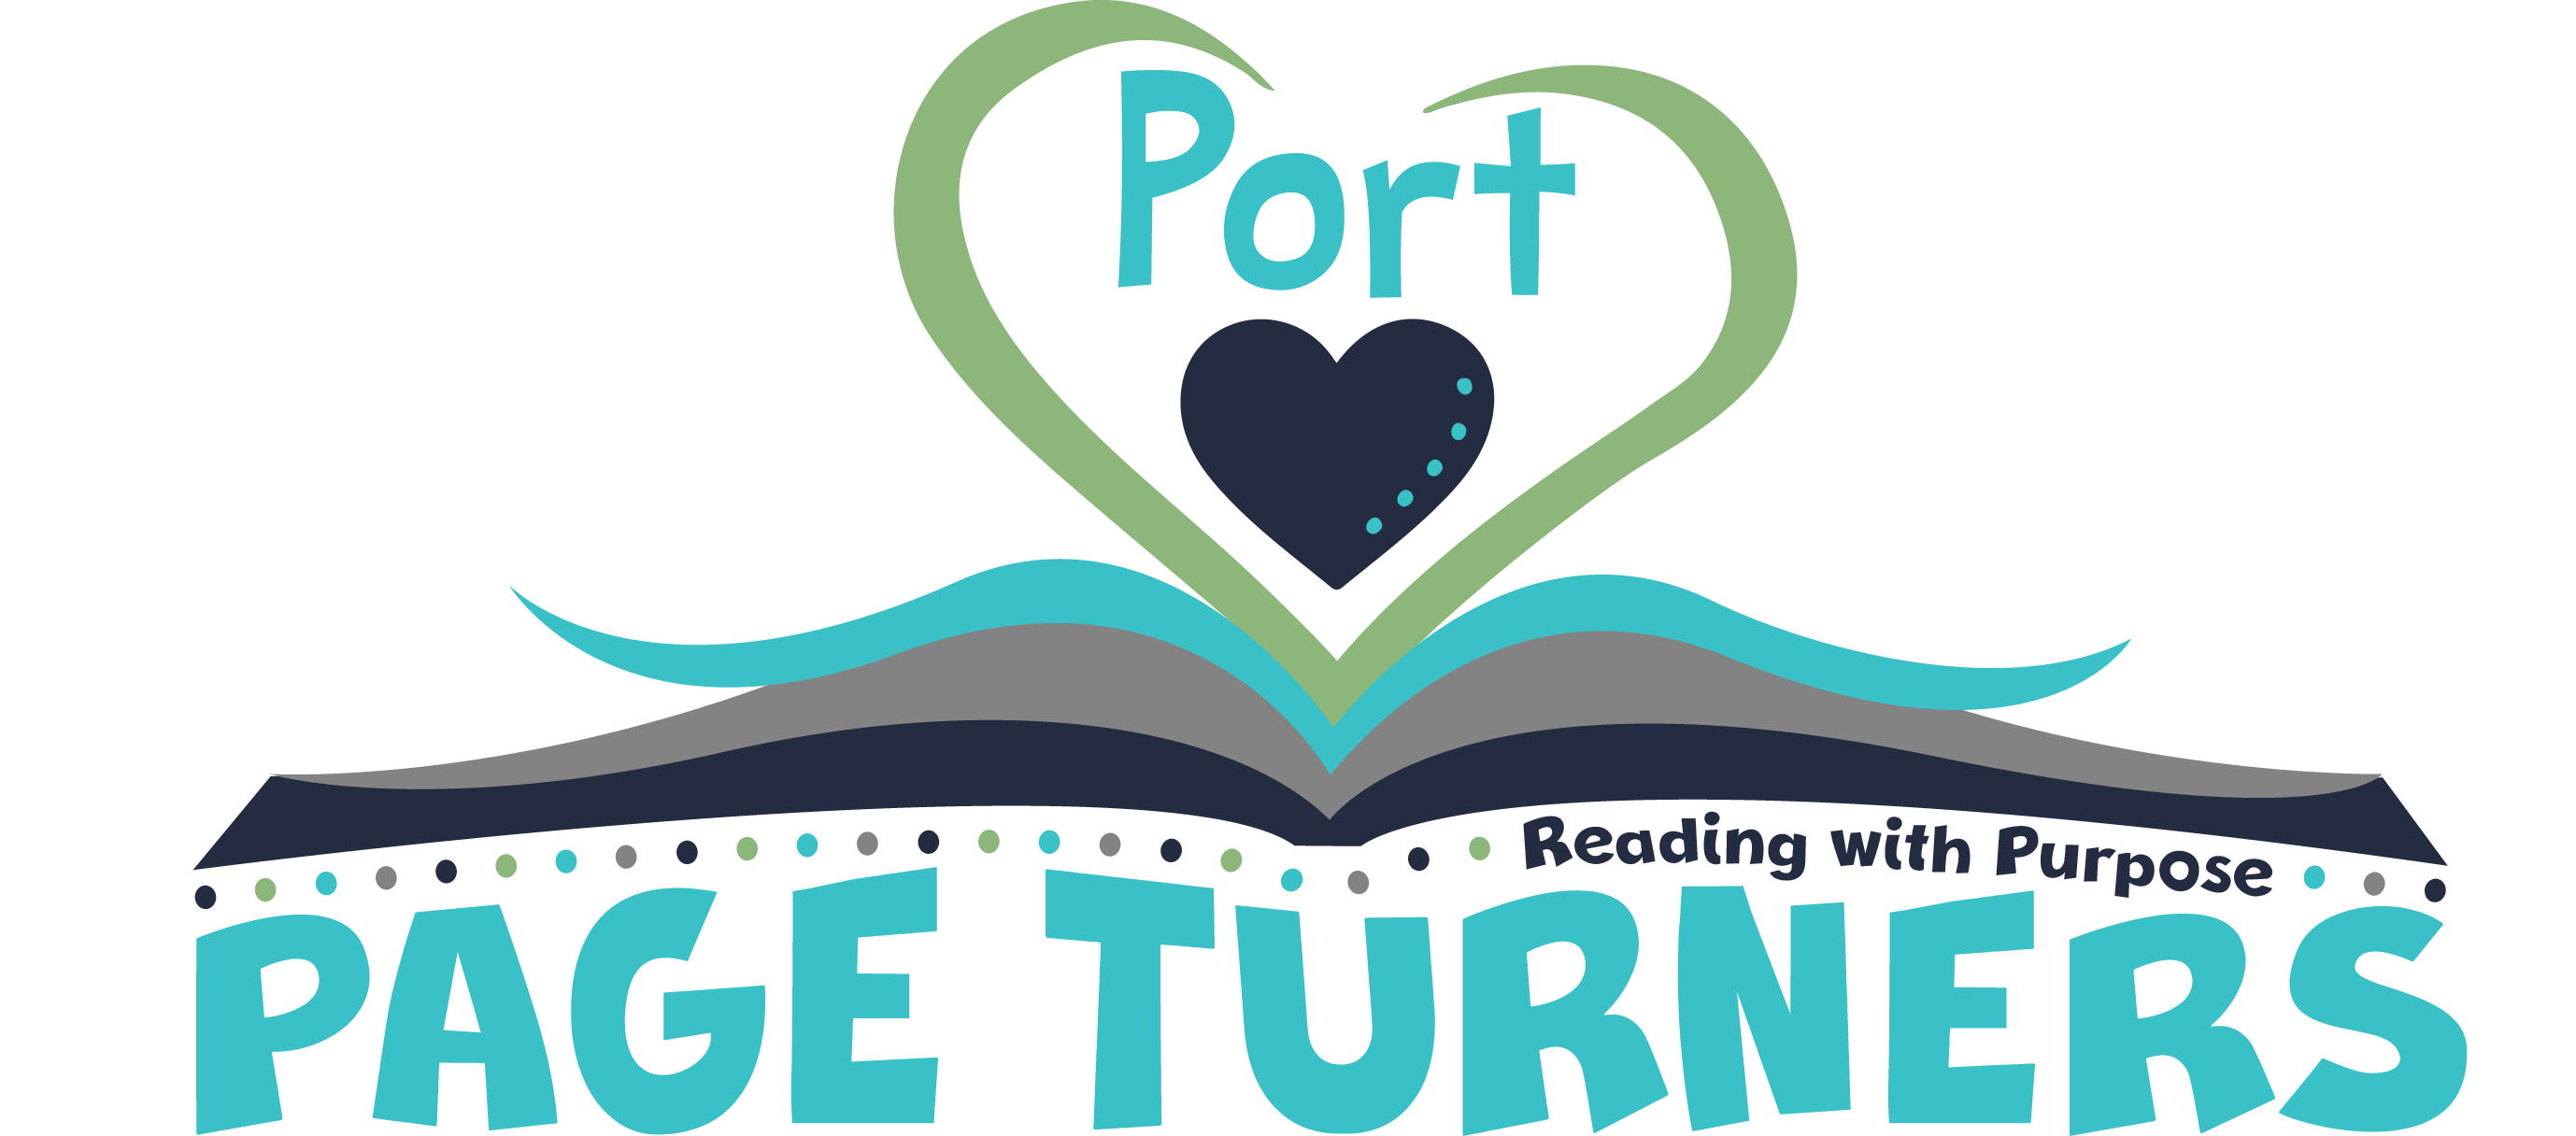 Port Page Turners logo